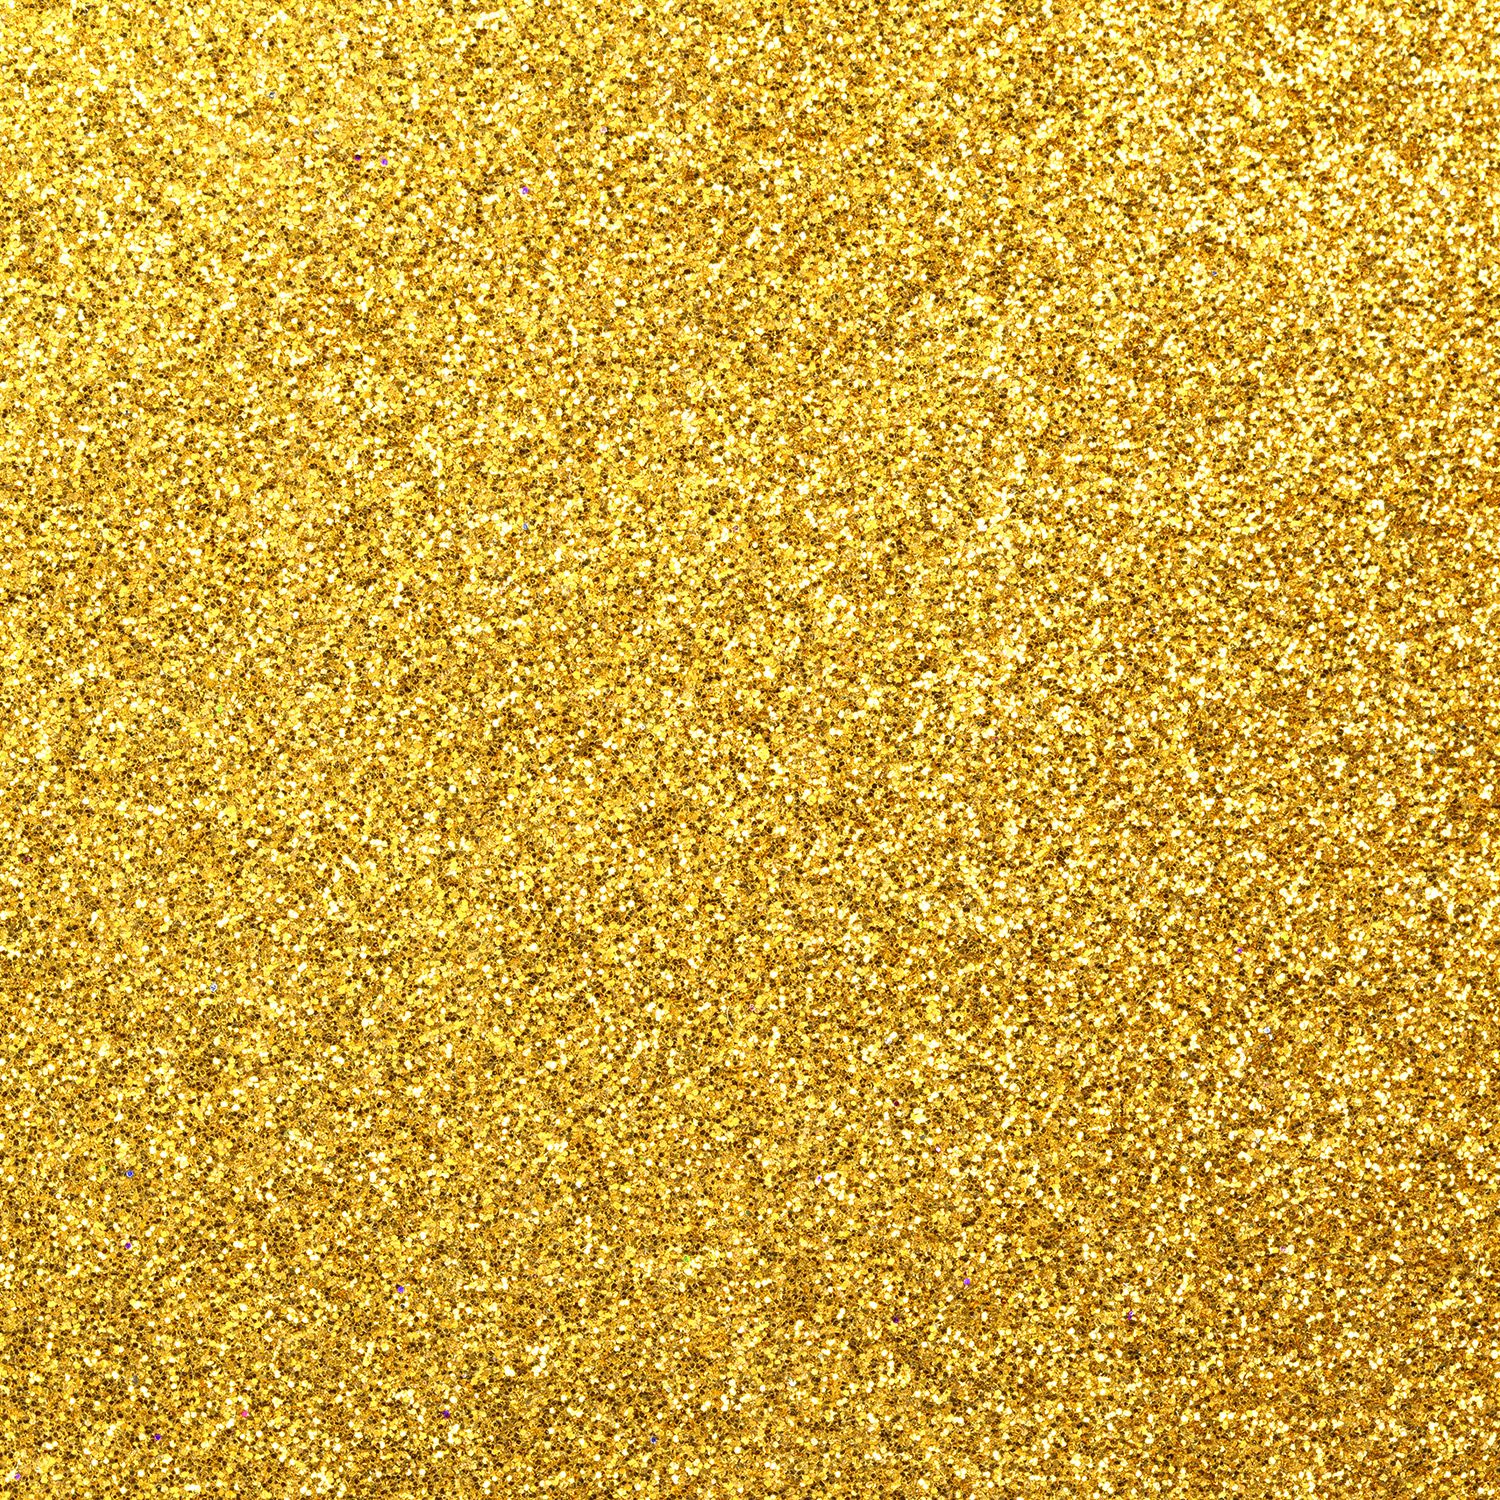 Glitter Gold Wallpapers - Wallpaper Cave